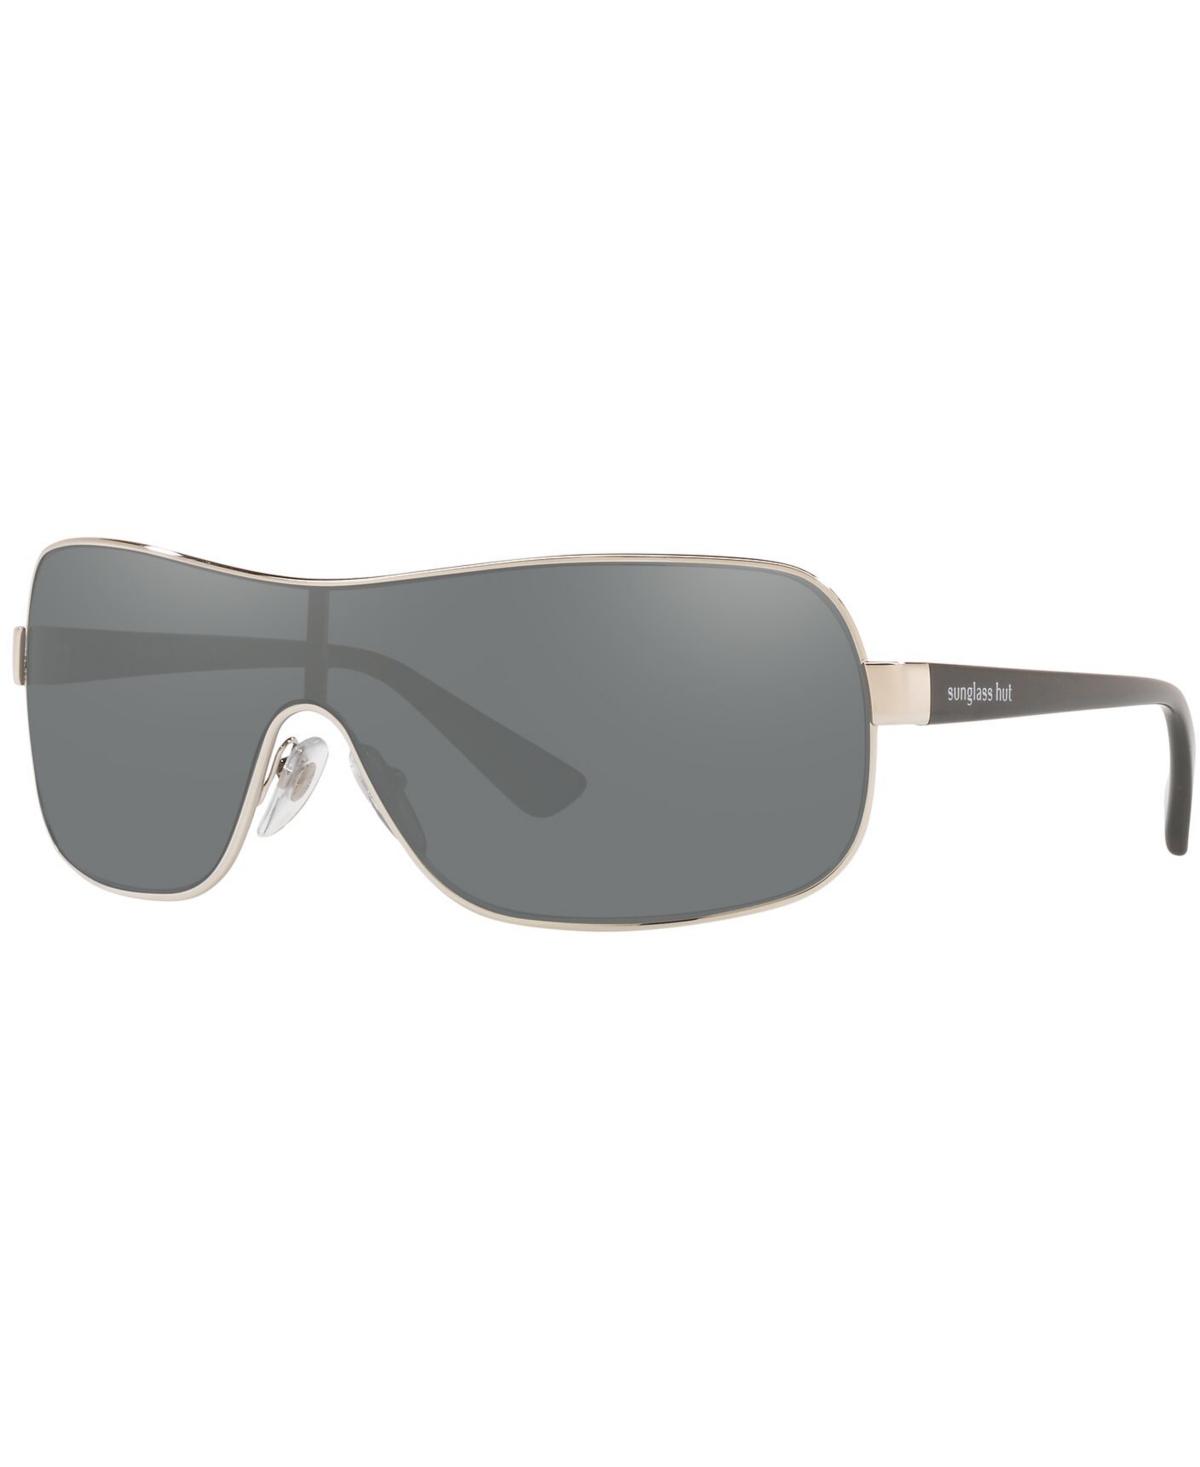 Sunglass Hut Collection Sunglasses, 0hu1008 In Shiny Silver,light Blue Silver Mirror